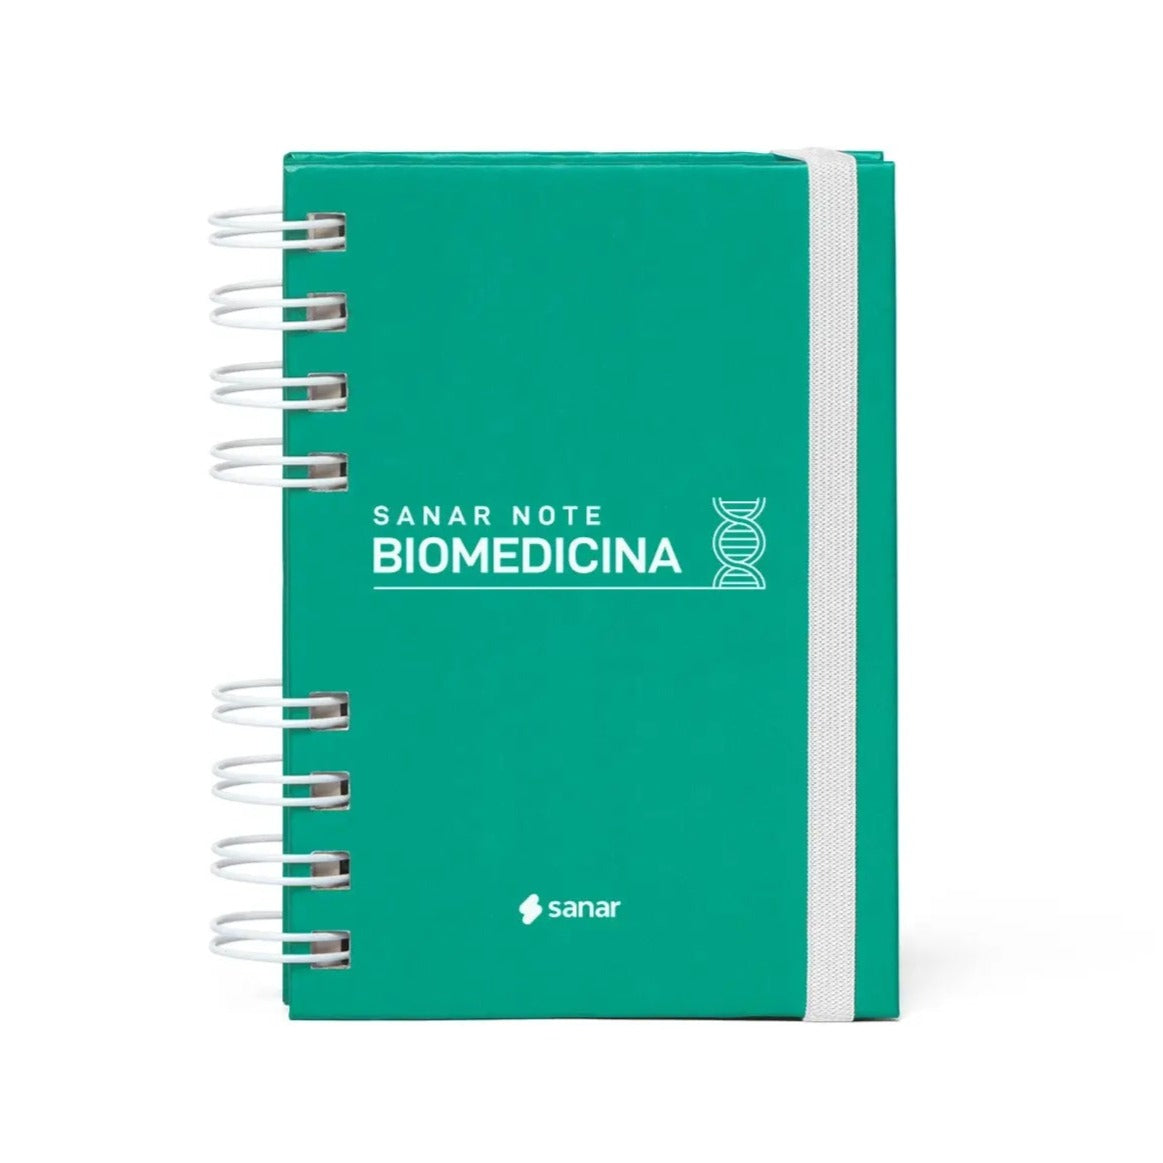 Sanar Note Biomedicina - Livro Técnico Sanar Saúde